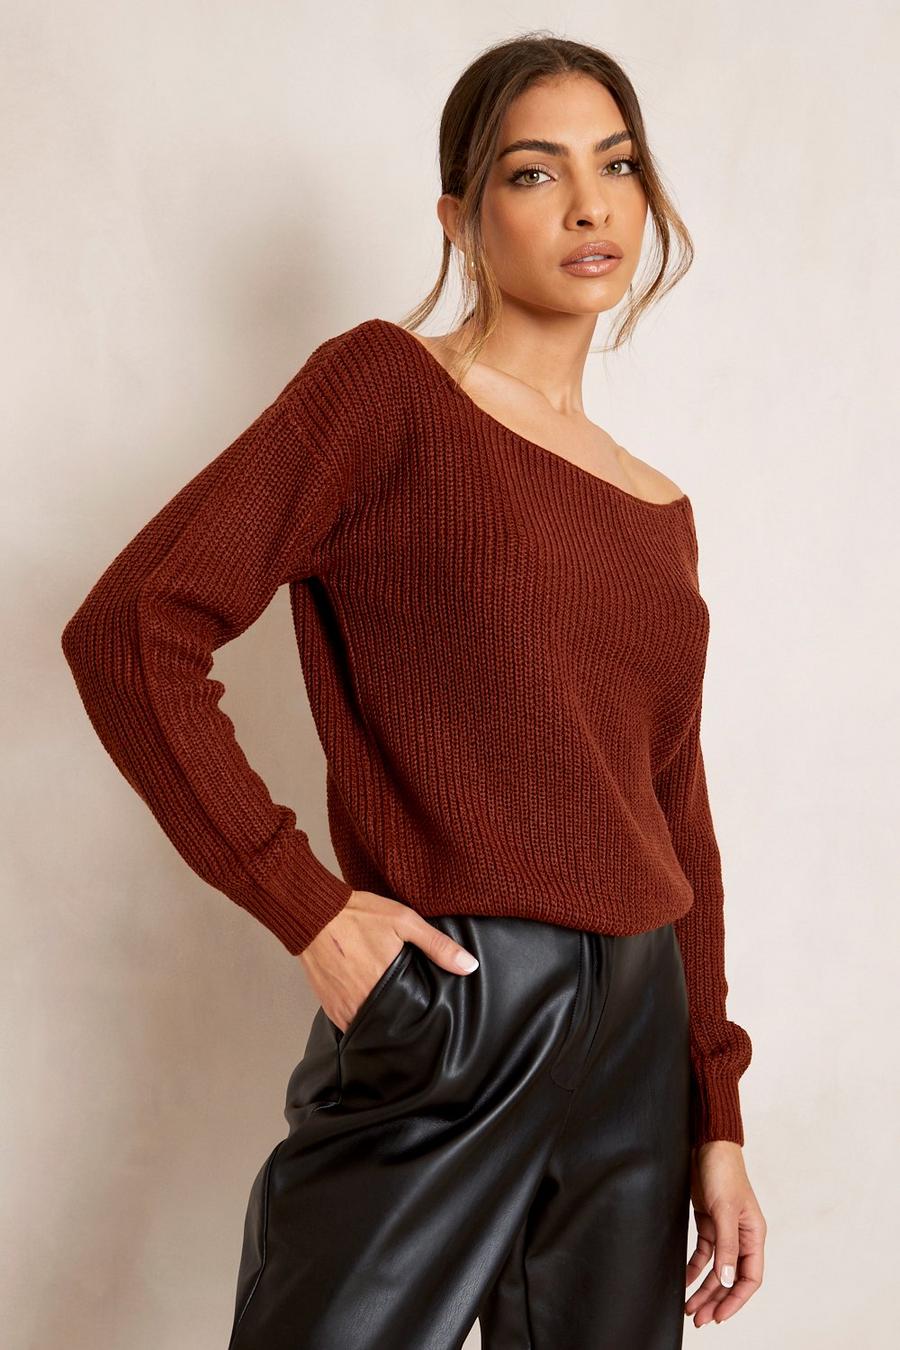 Mahogany brown Recycled Slash Neck Crop Sweater